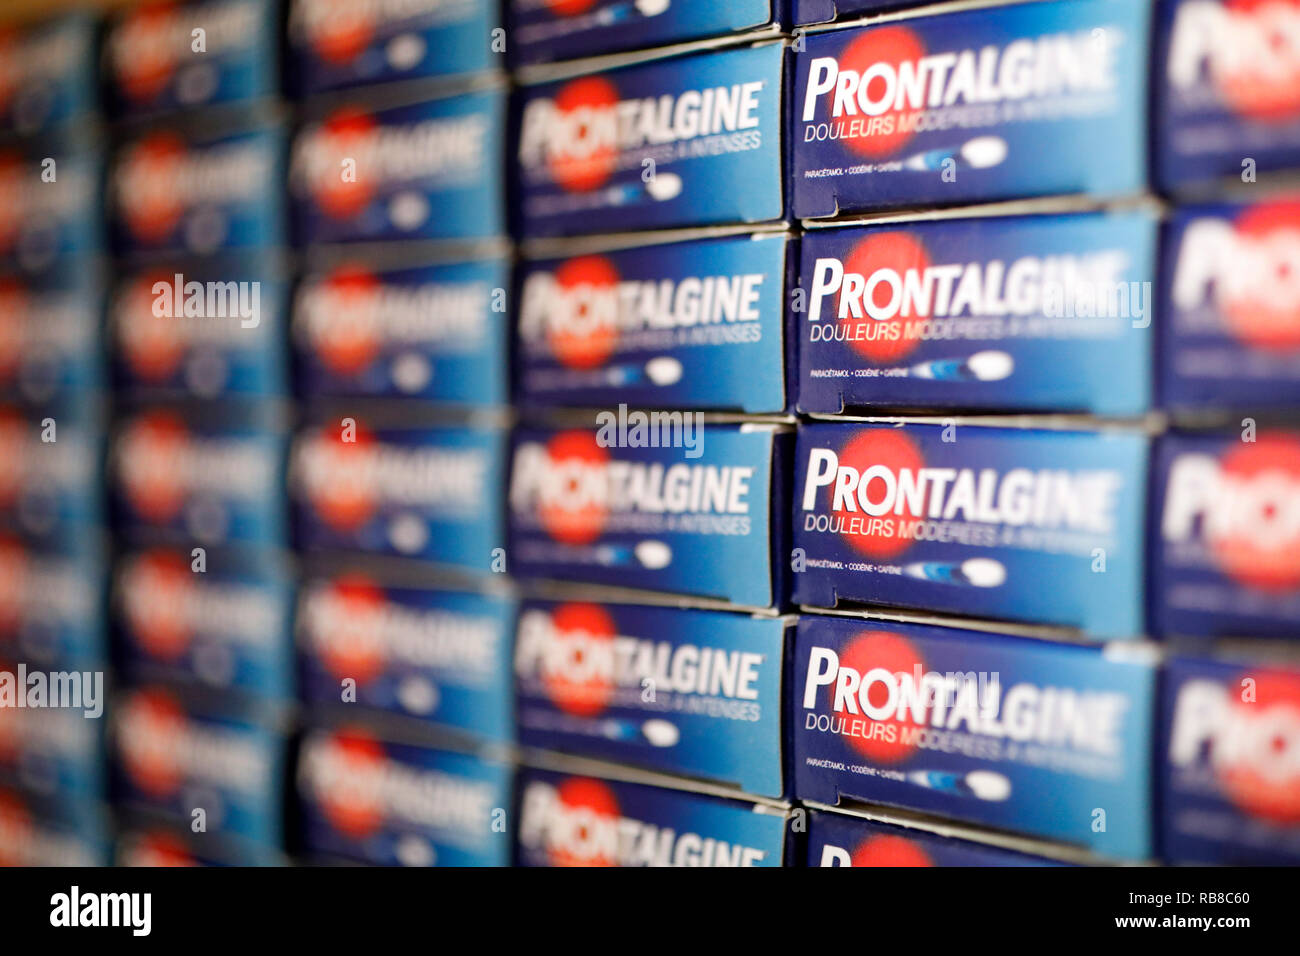 Pharmacy. Medicine in shelves. Pain relief medicine Prontalgine. France. Stock Photo